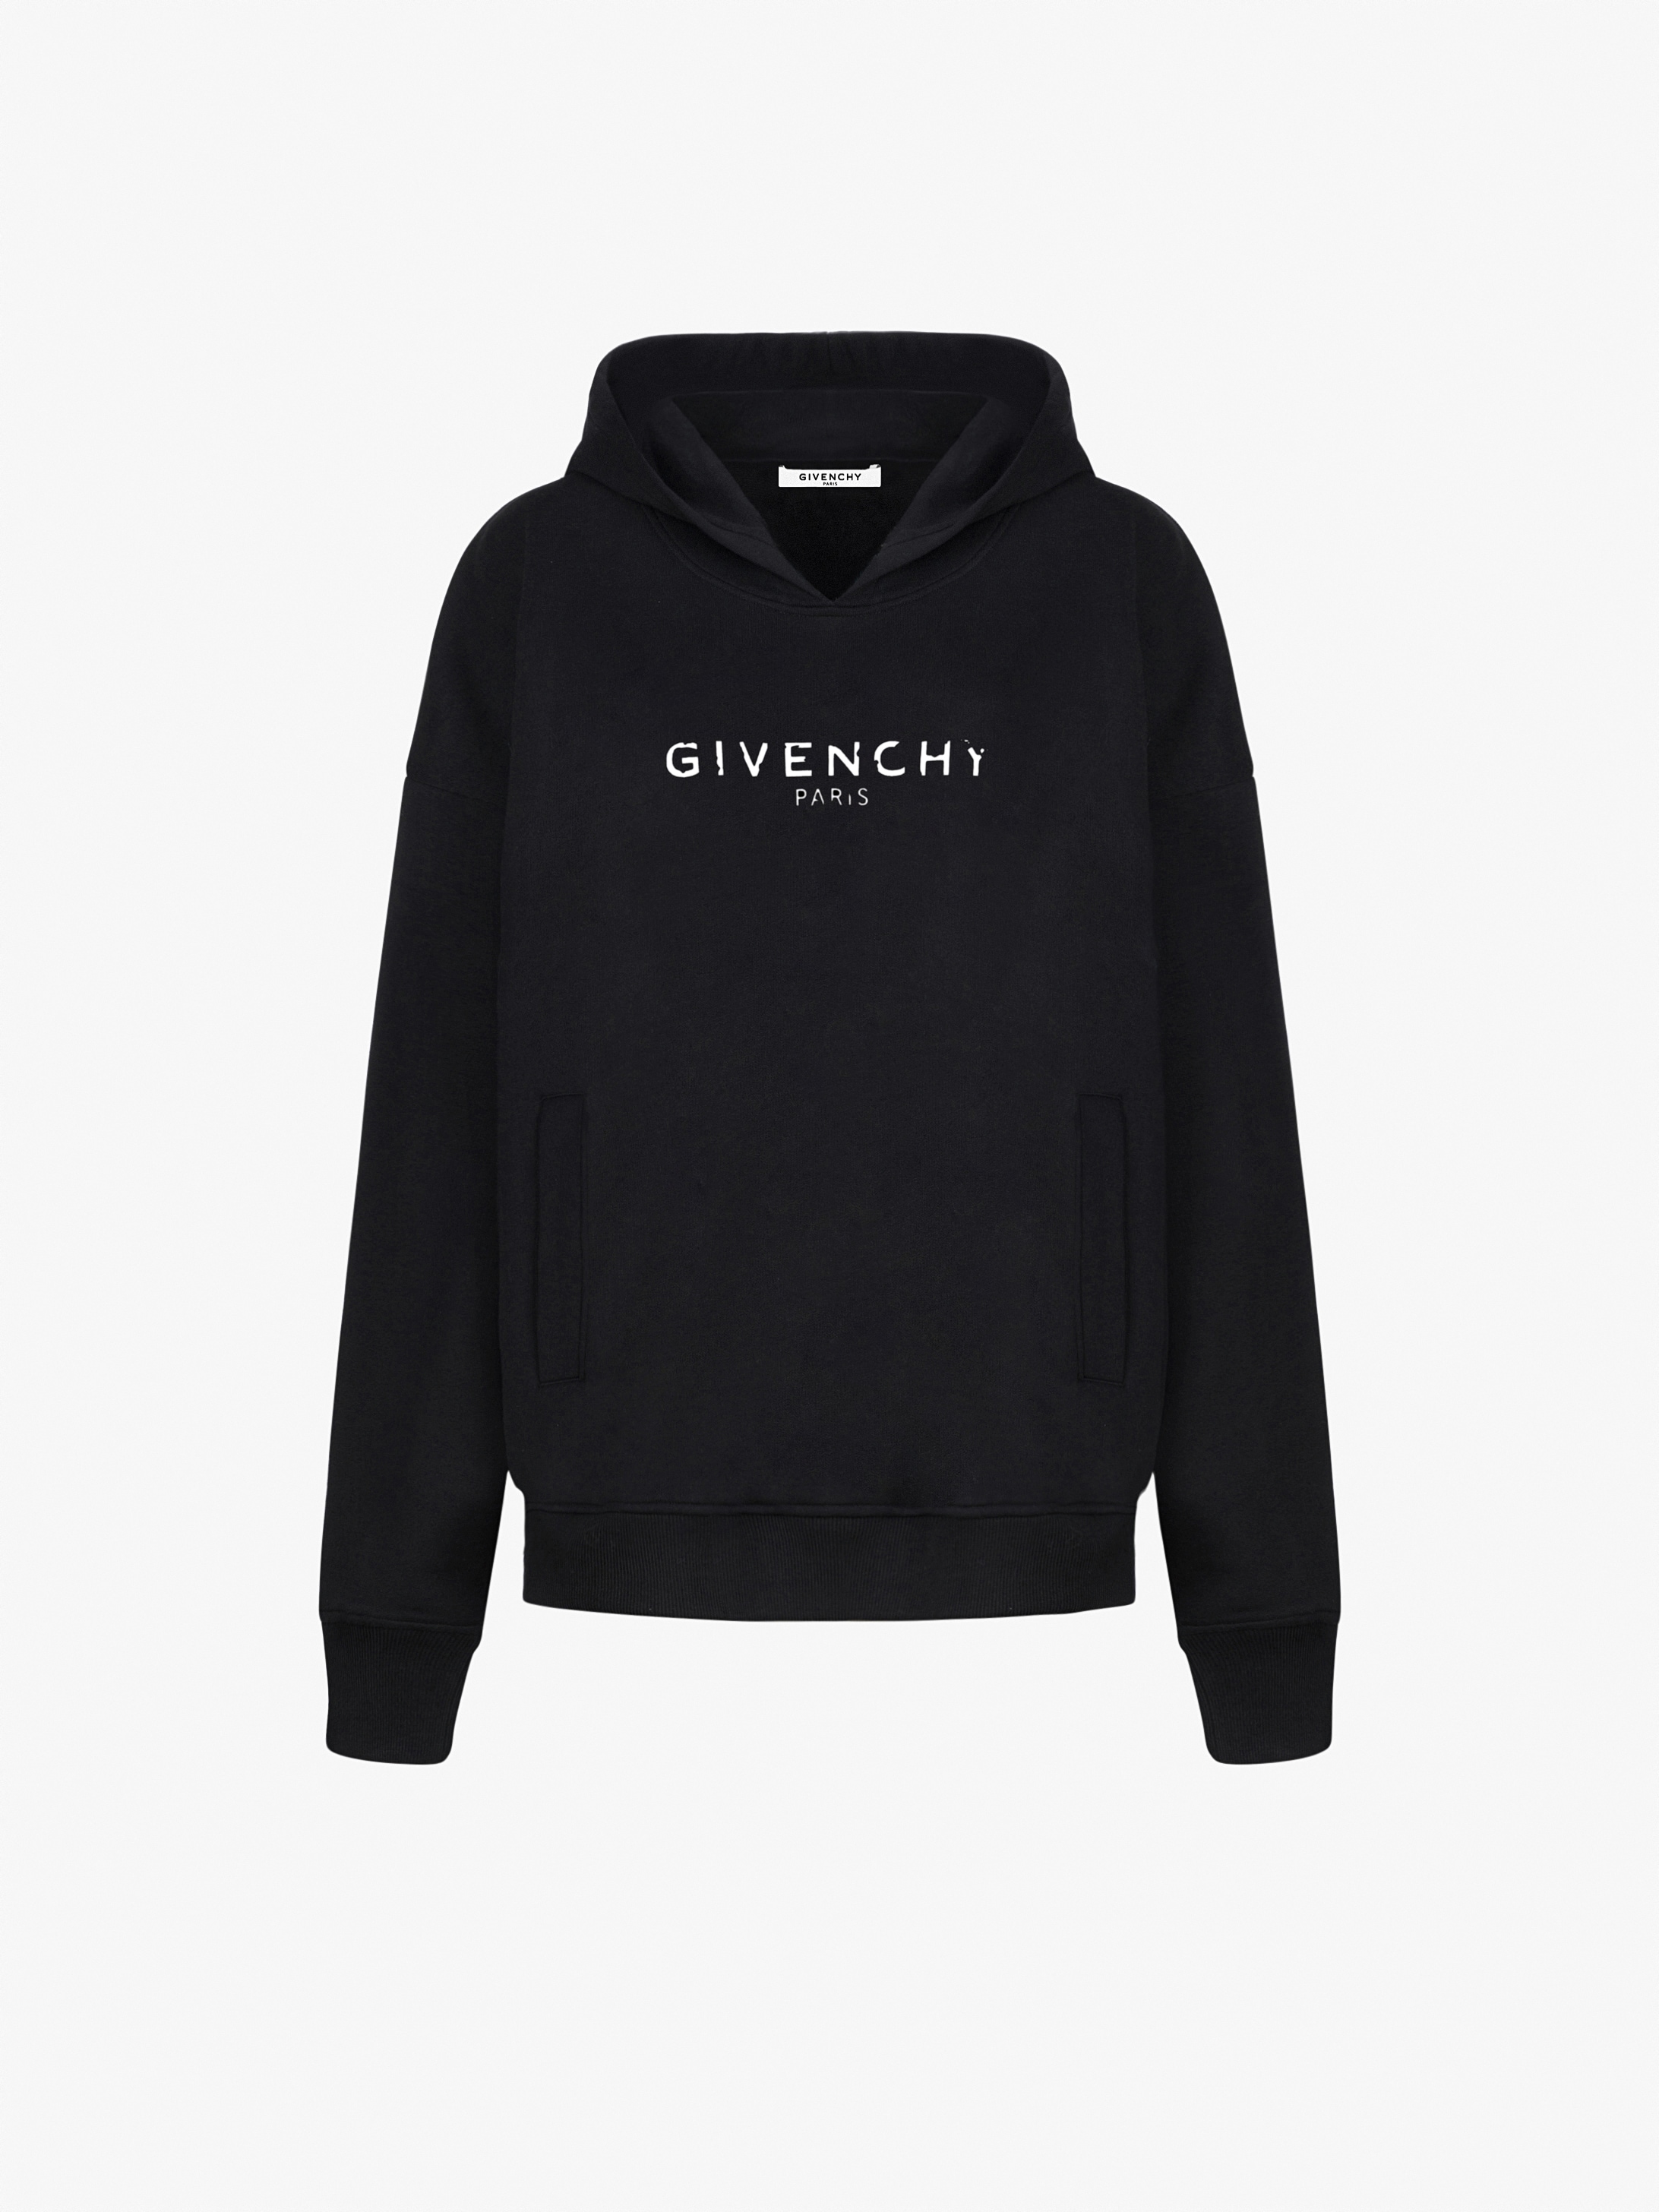 black and white givenchy sweatshirt